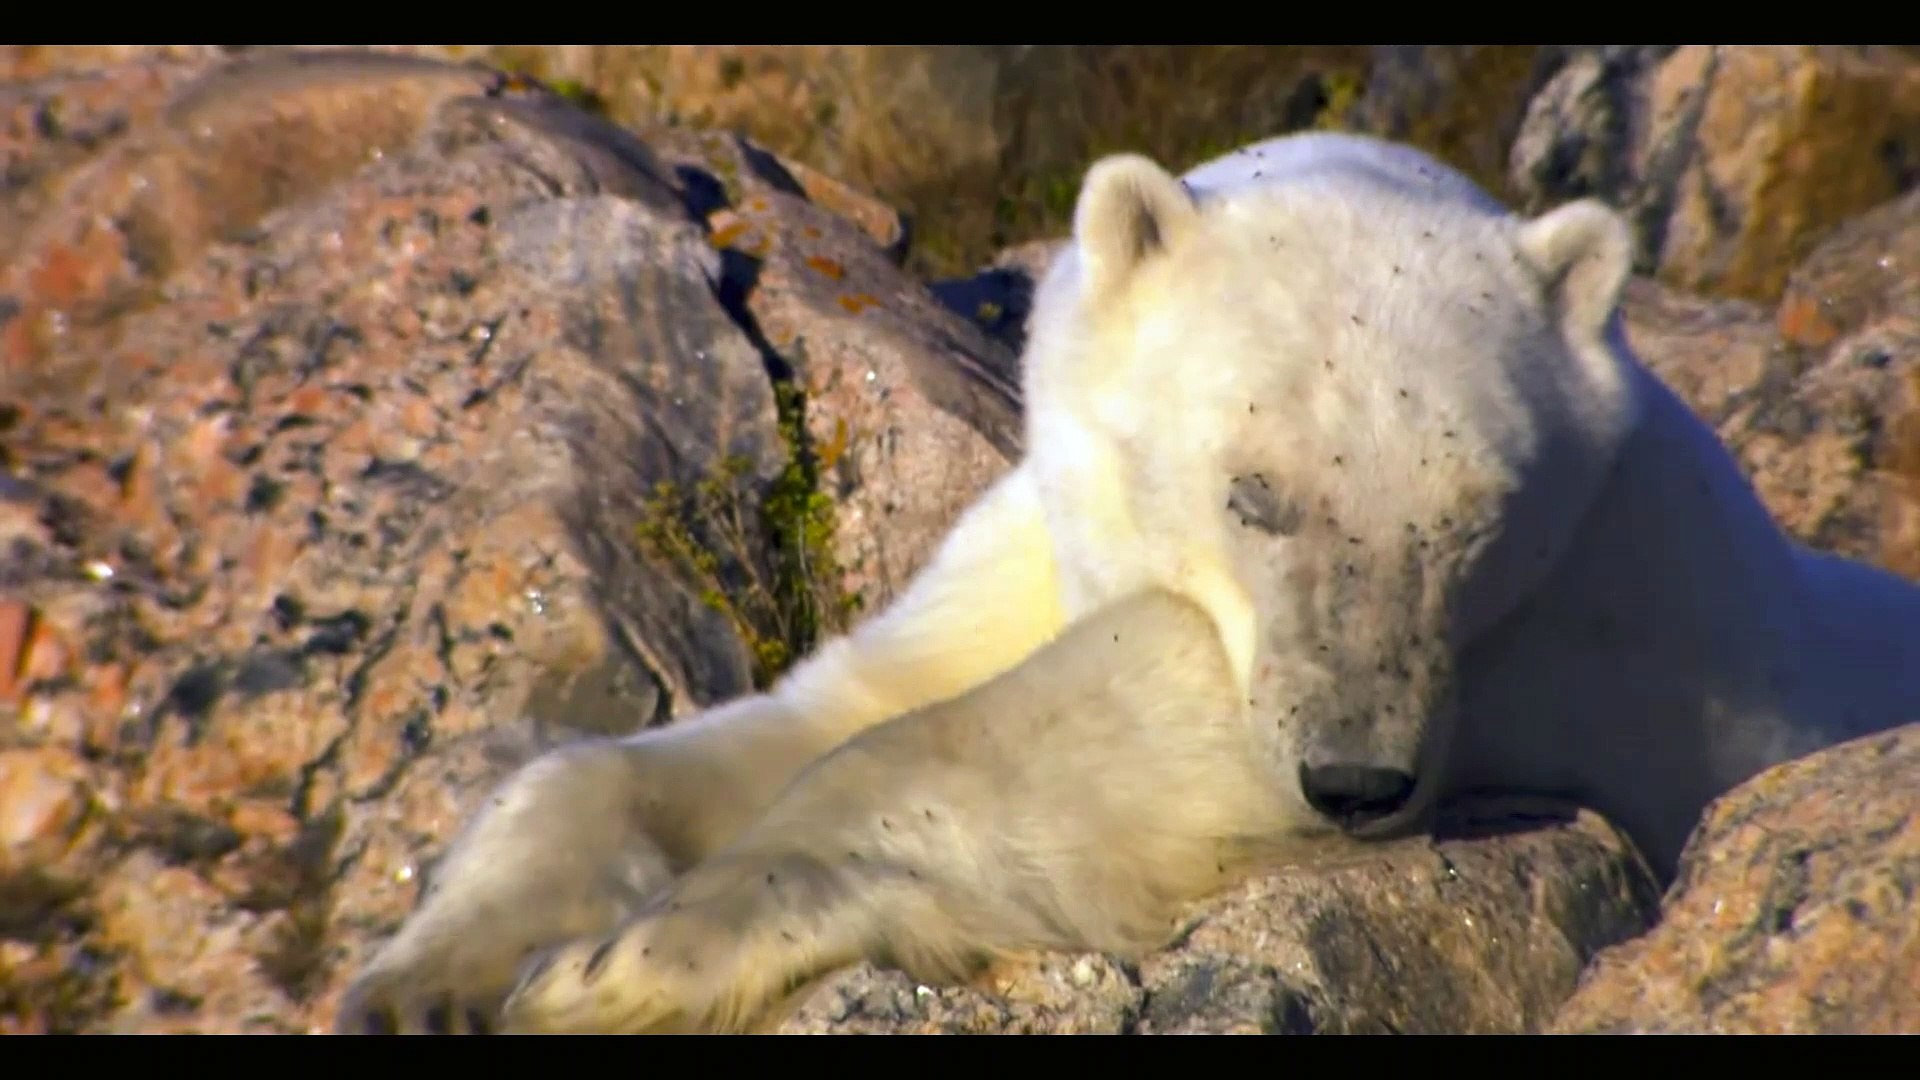 Polar Bear vs Walrus